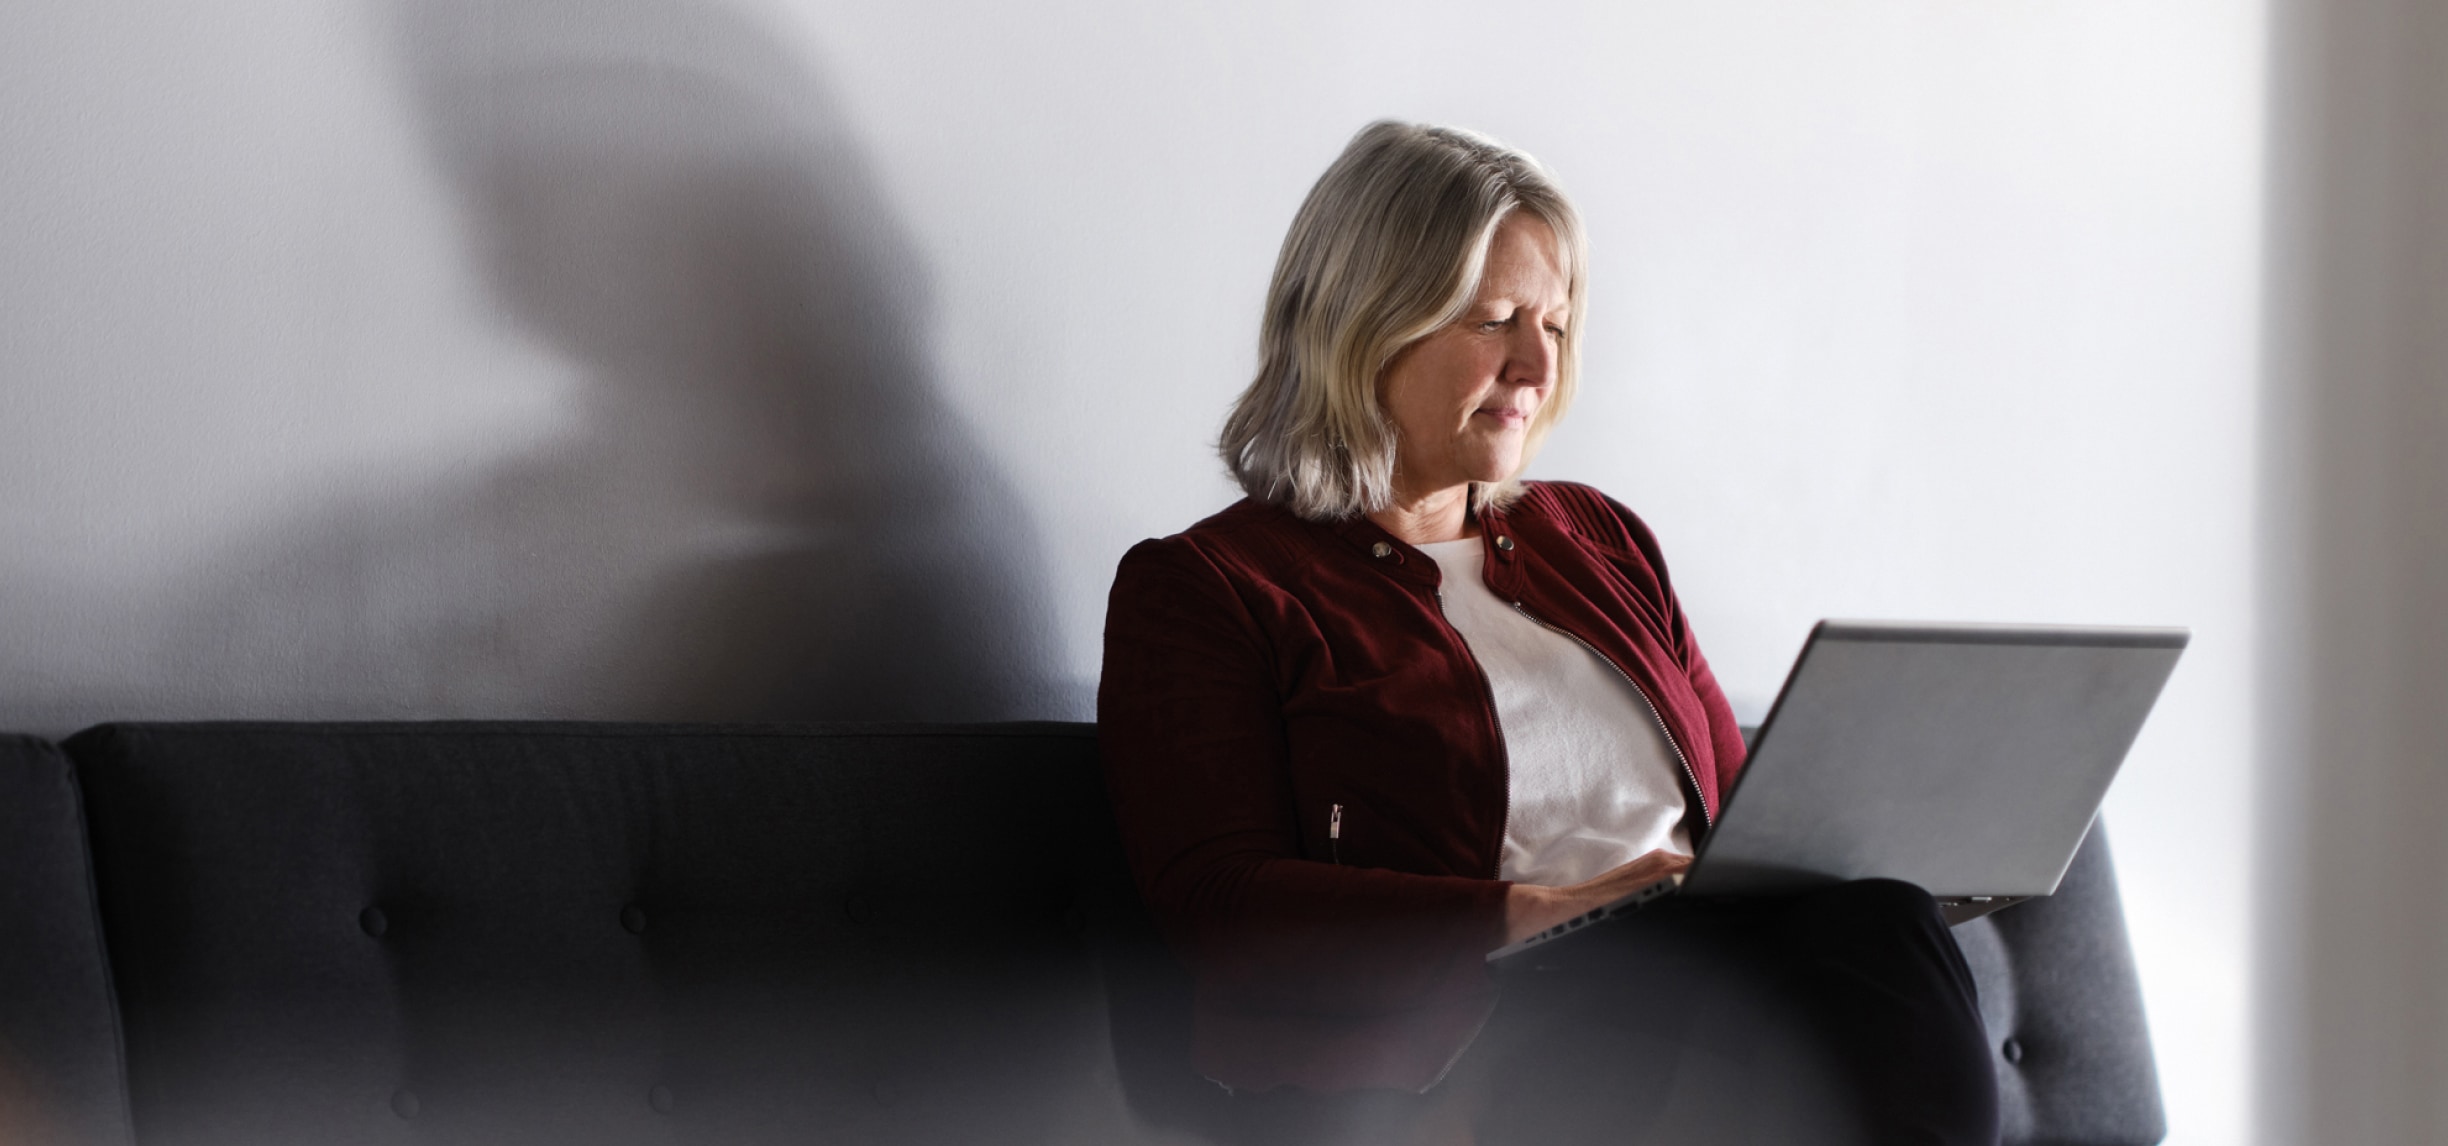 A woman on a black sofa using a laptop.